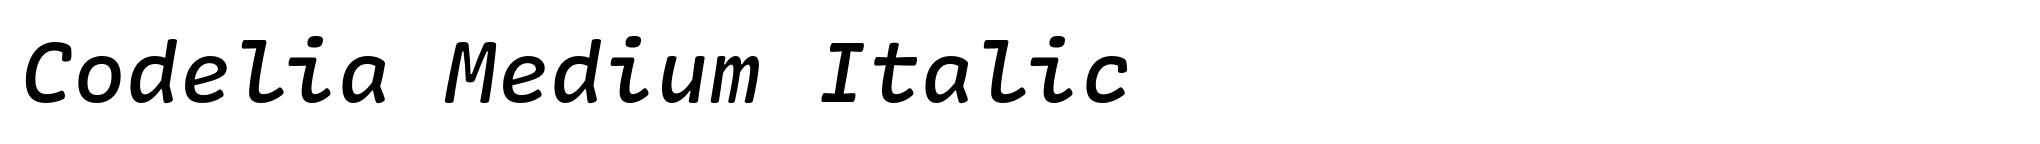 Codelia Medium Italic image